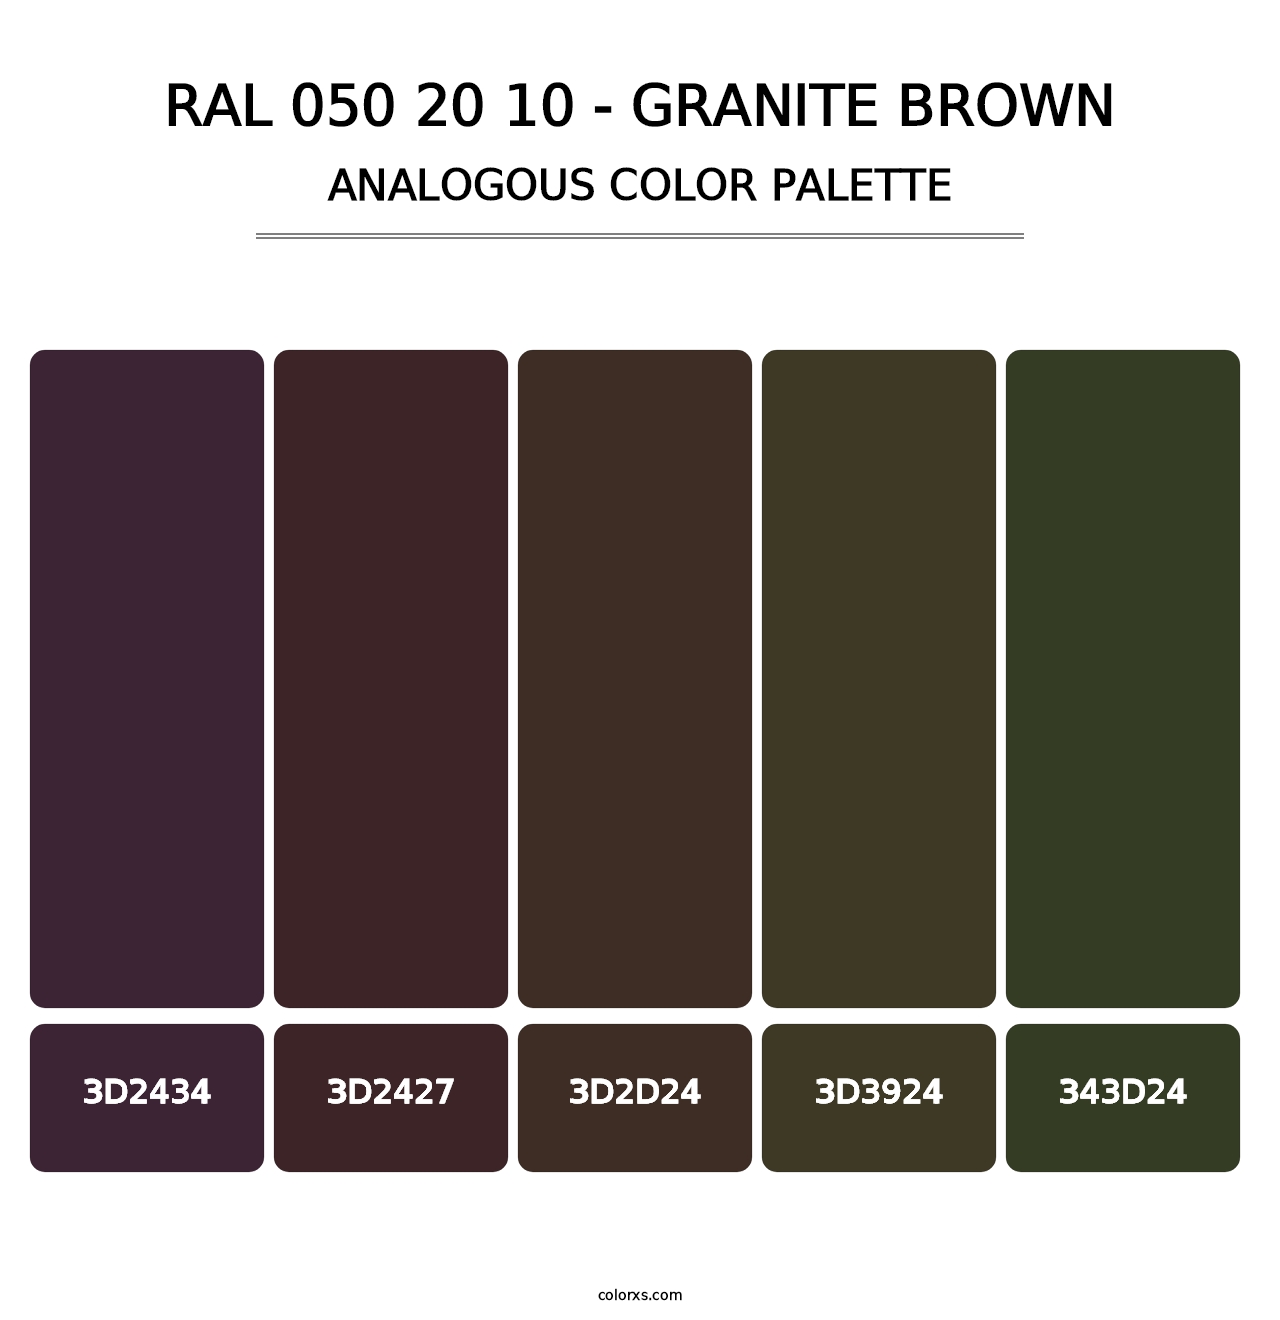 RAL 050 20 10 - Granite Brown - Analogous Color Palette